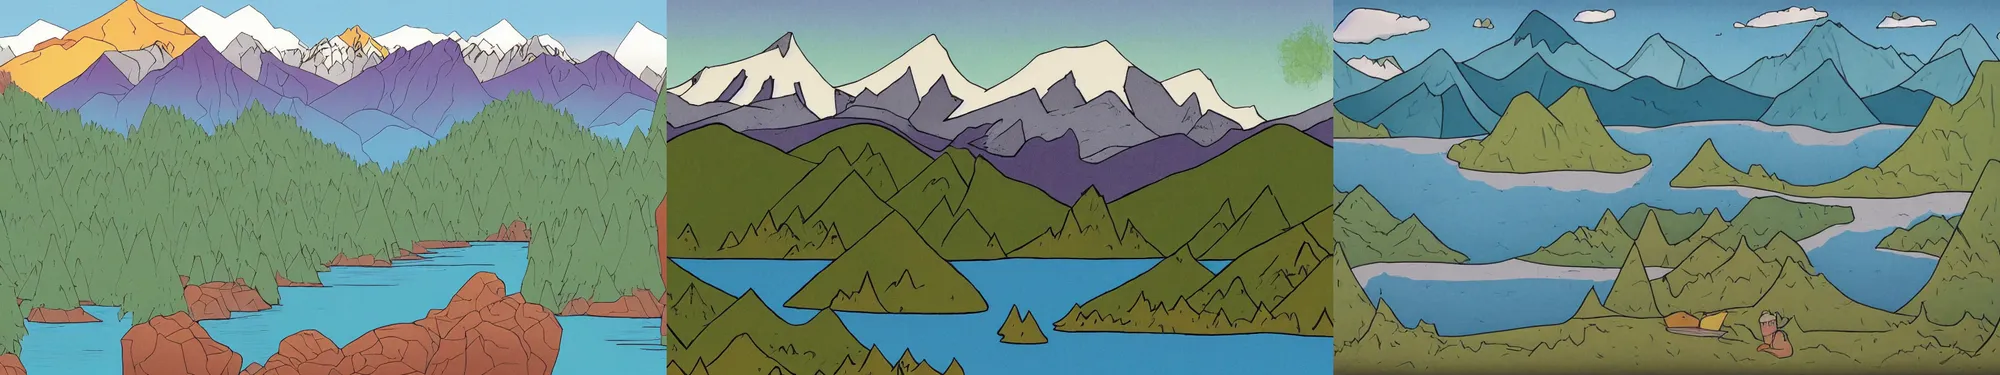 Prompt: lakeside mountains, by pendleton ward